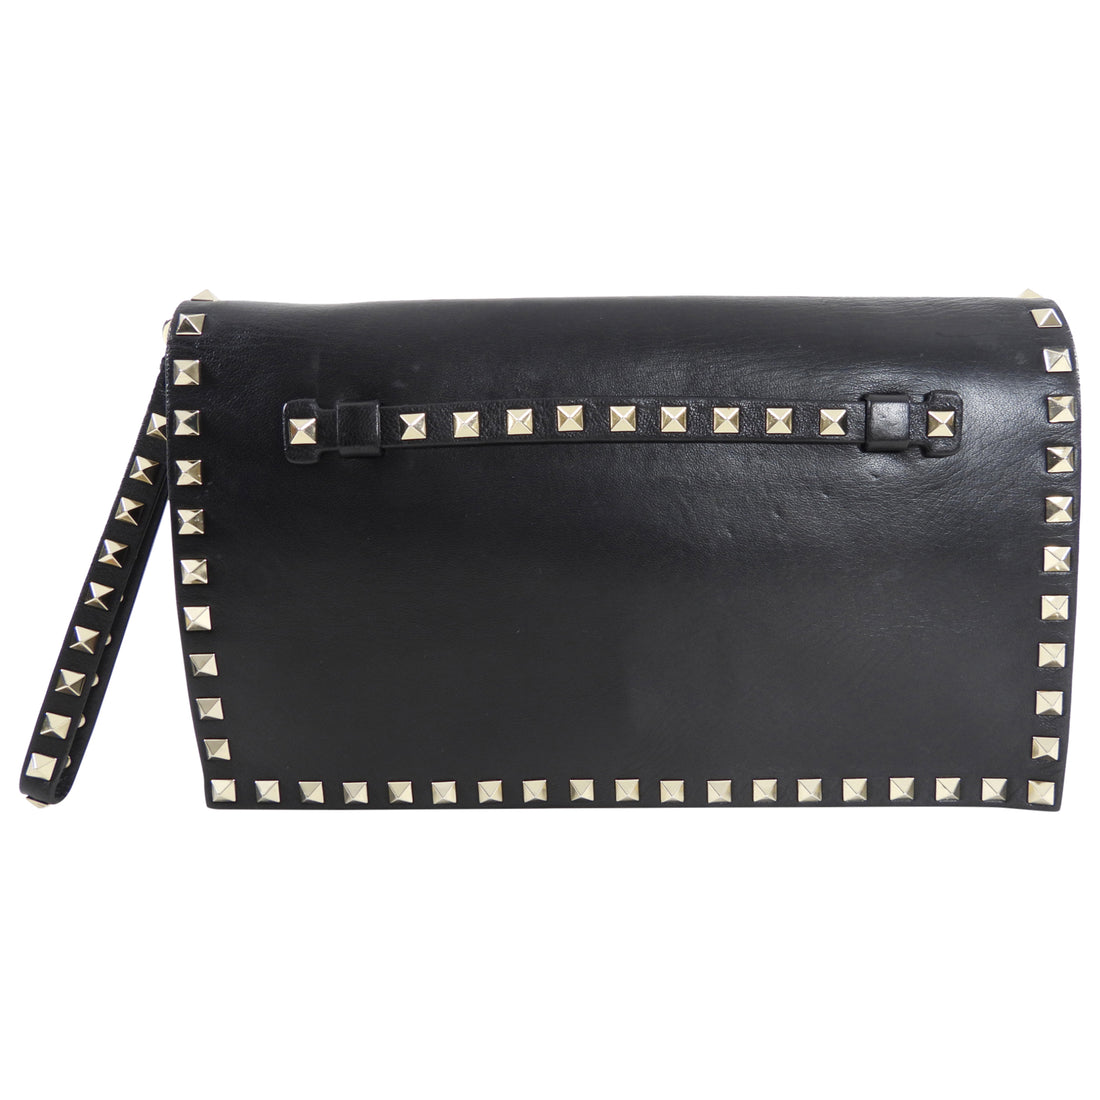 Rockstud leather clutch bag Valentino Garavani Black in Leather - 25214780